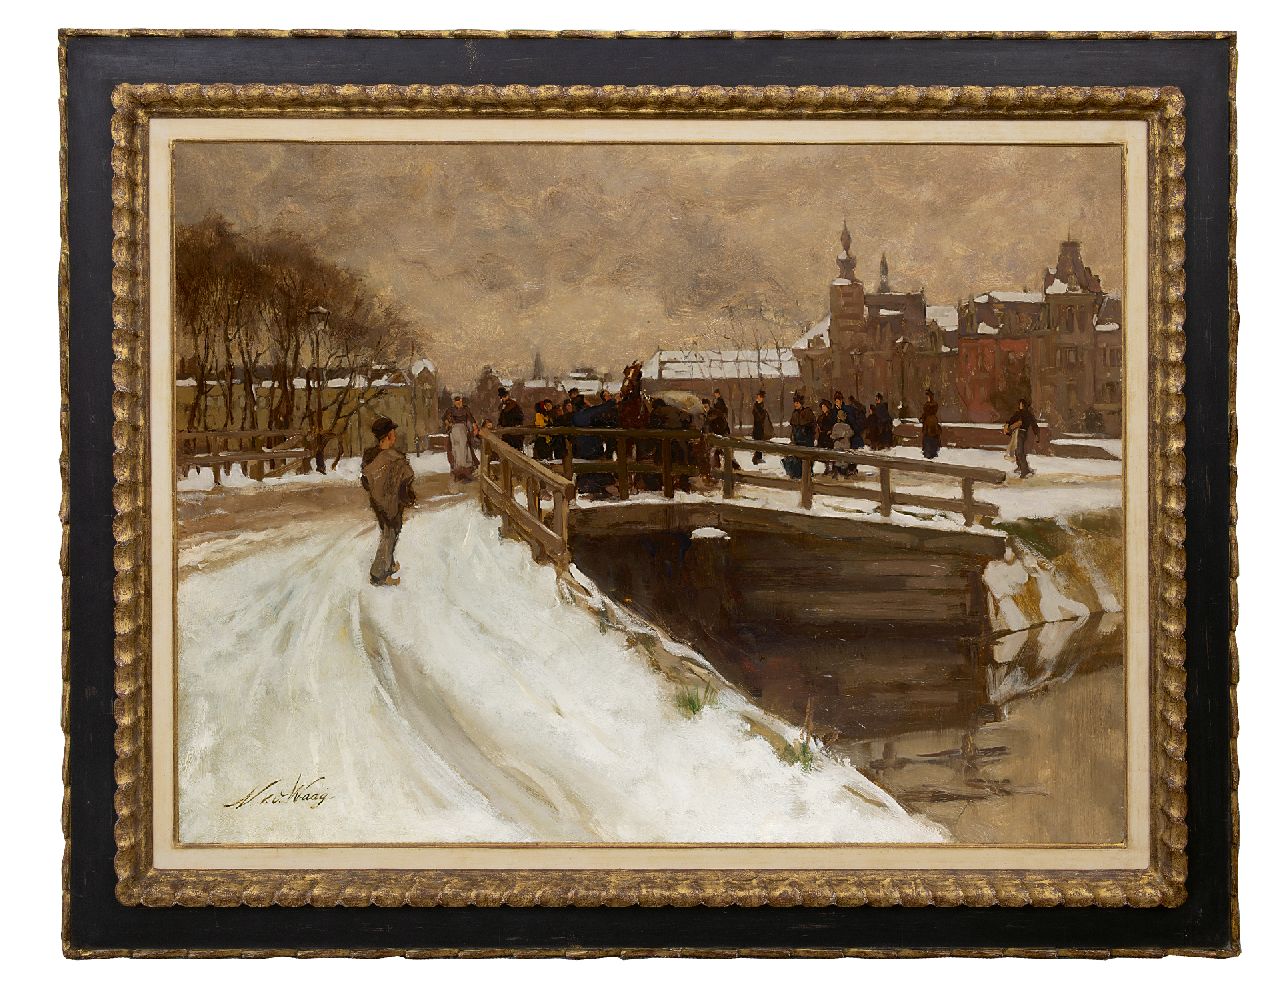 Waay N. van der | Nicolaas van der Waay, De Amsterdamse Stadhouderskade in de sneeuw, olieverf op doek 75,4 x 100,7 cm, gesigneerd linksonder